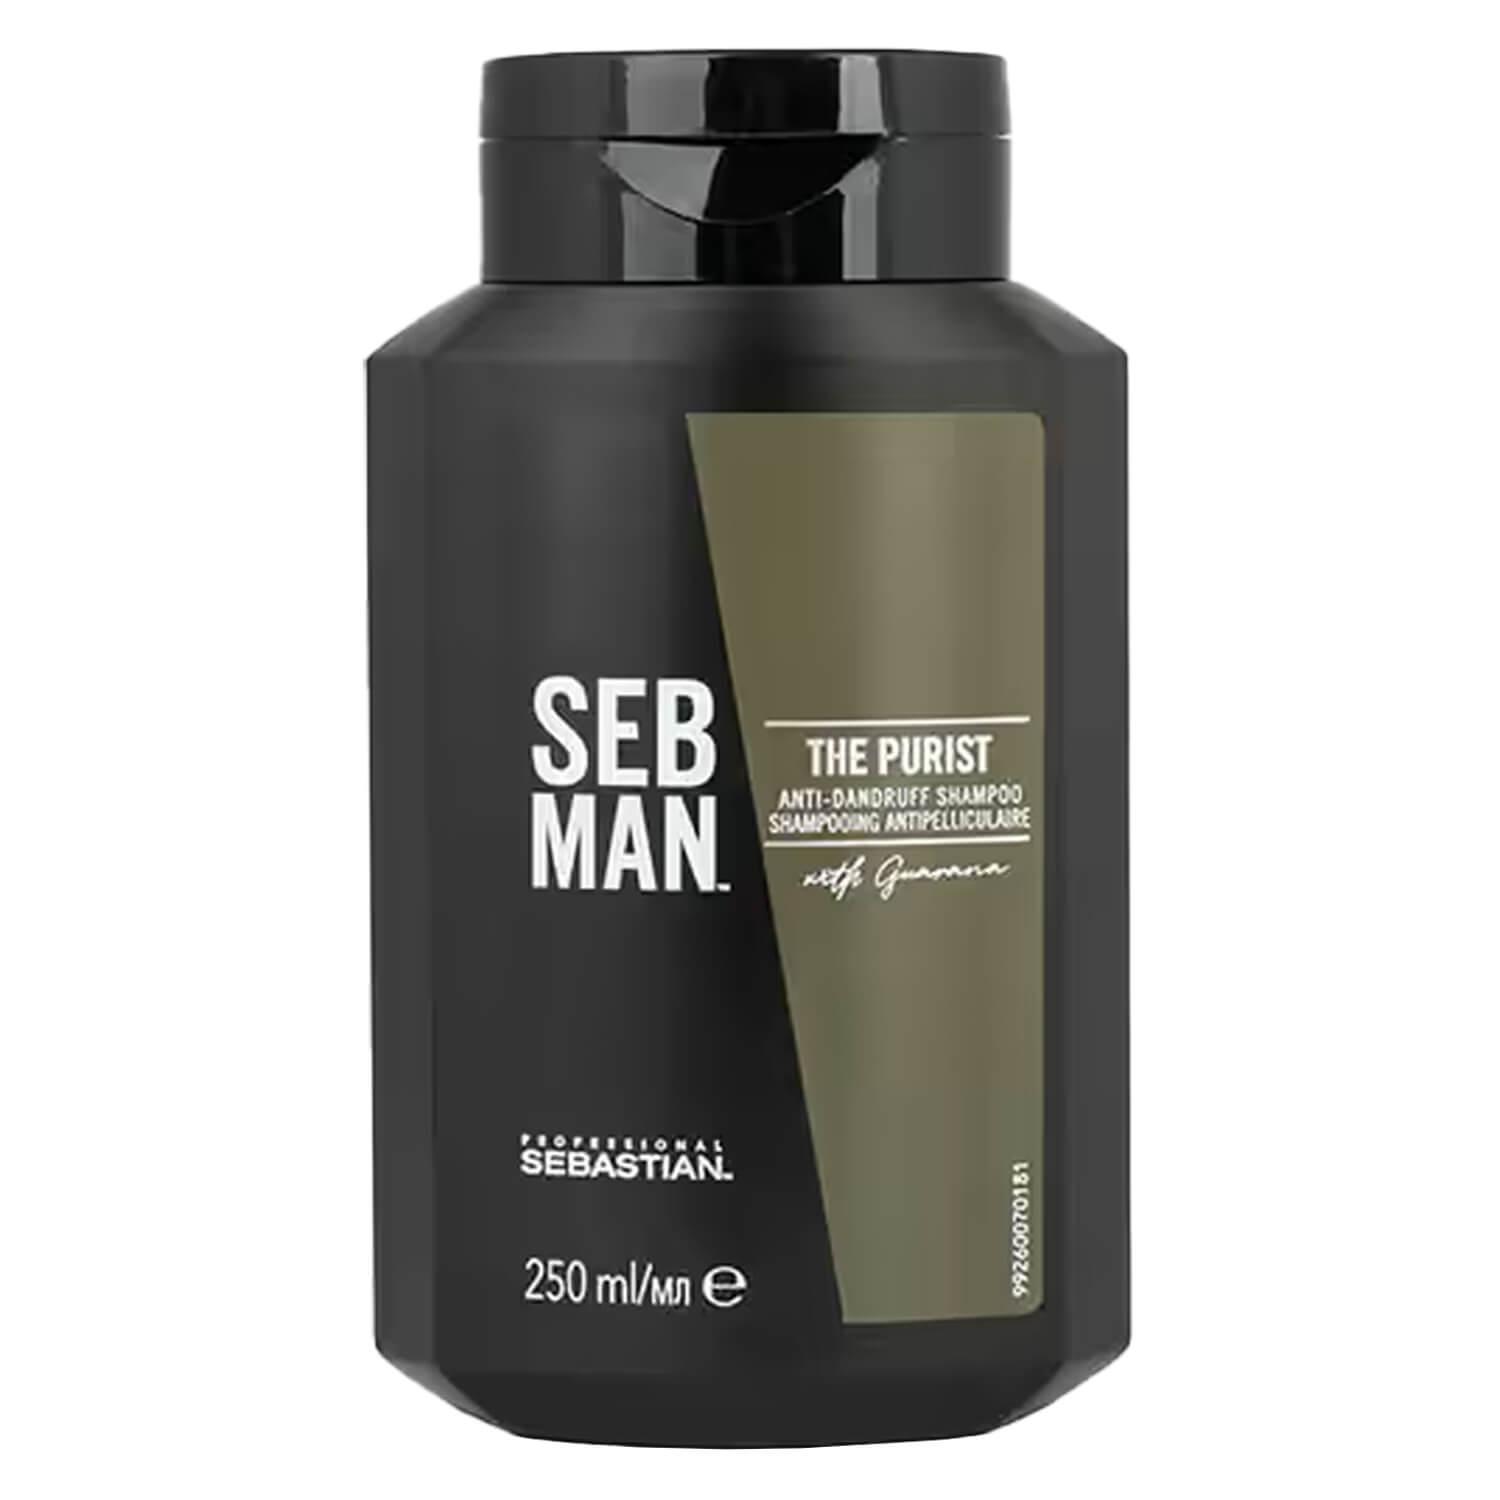 SEB MAN - The Purist Anti-Dandruff Shampoo